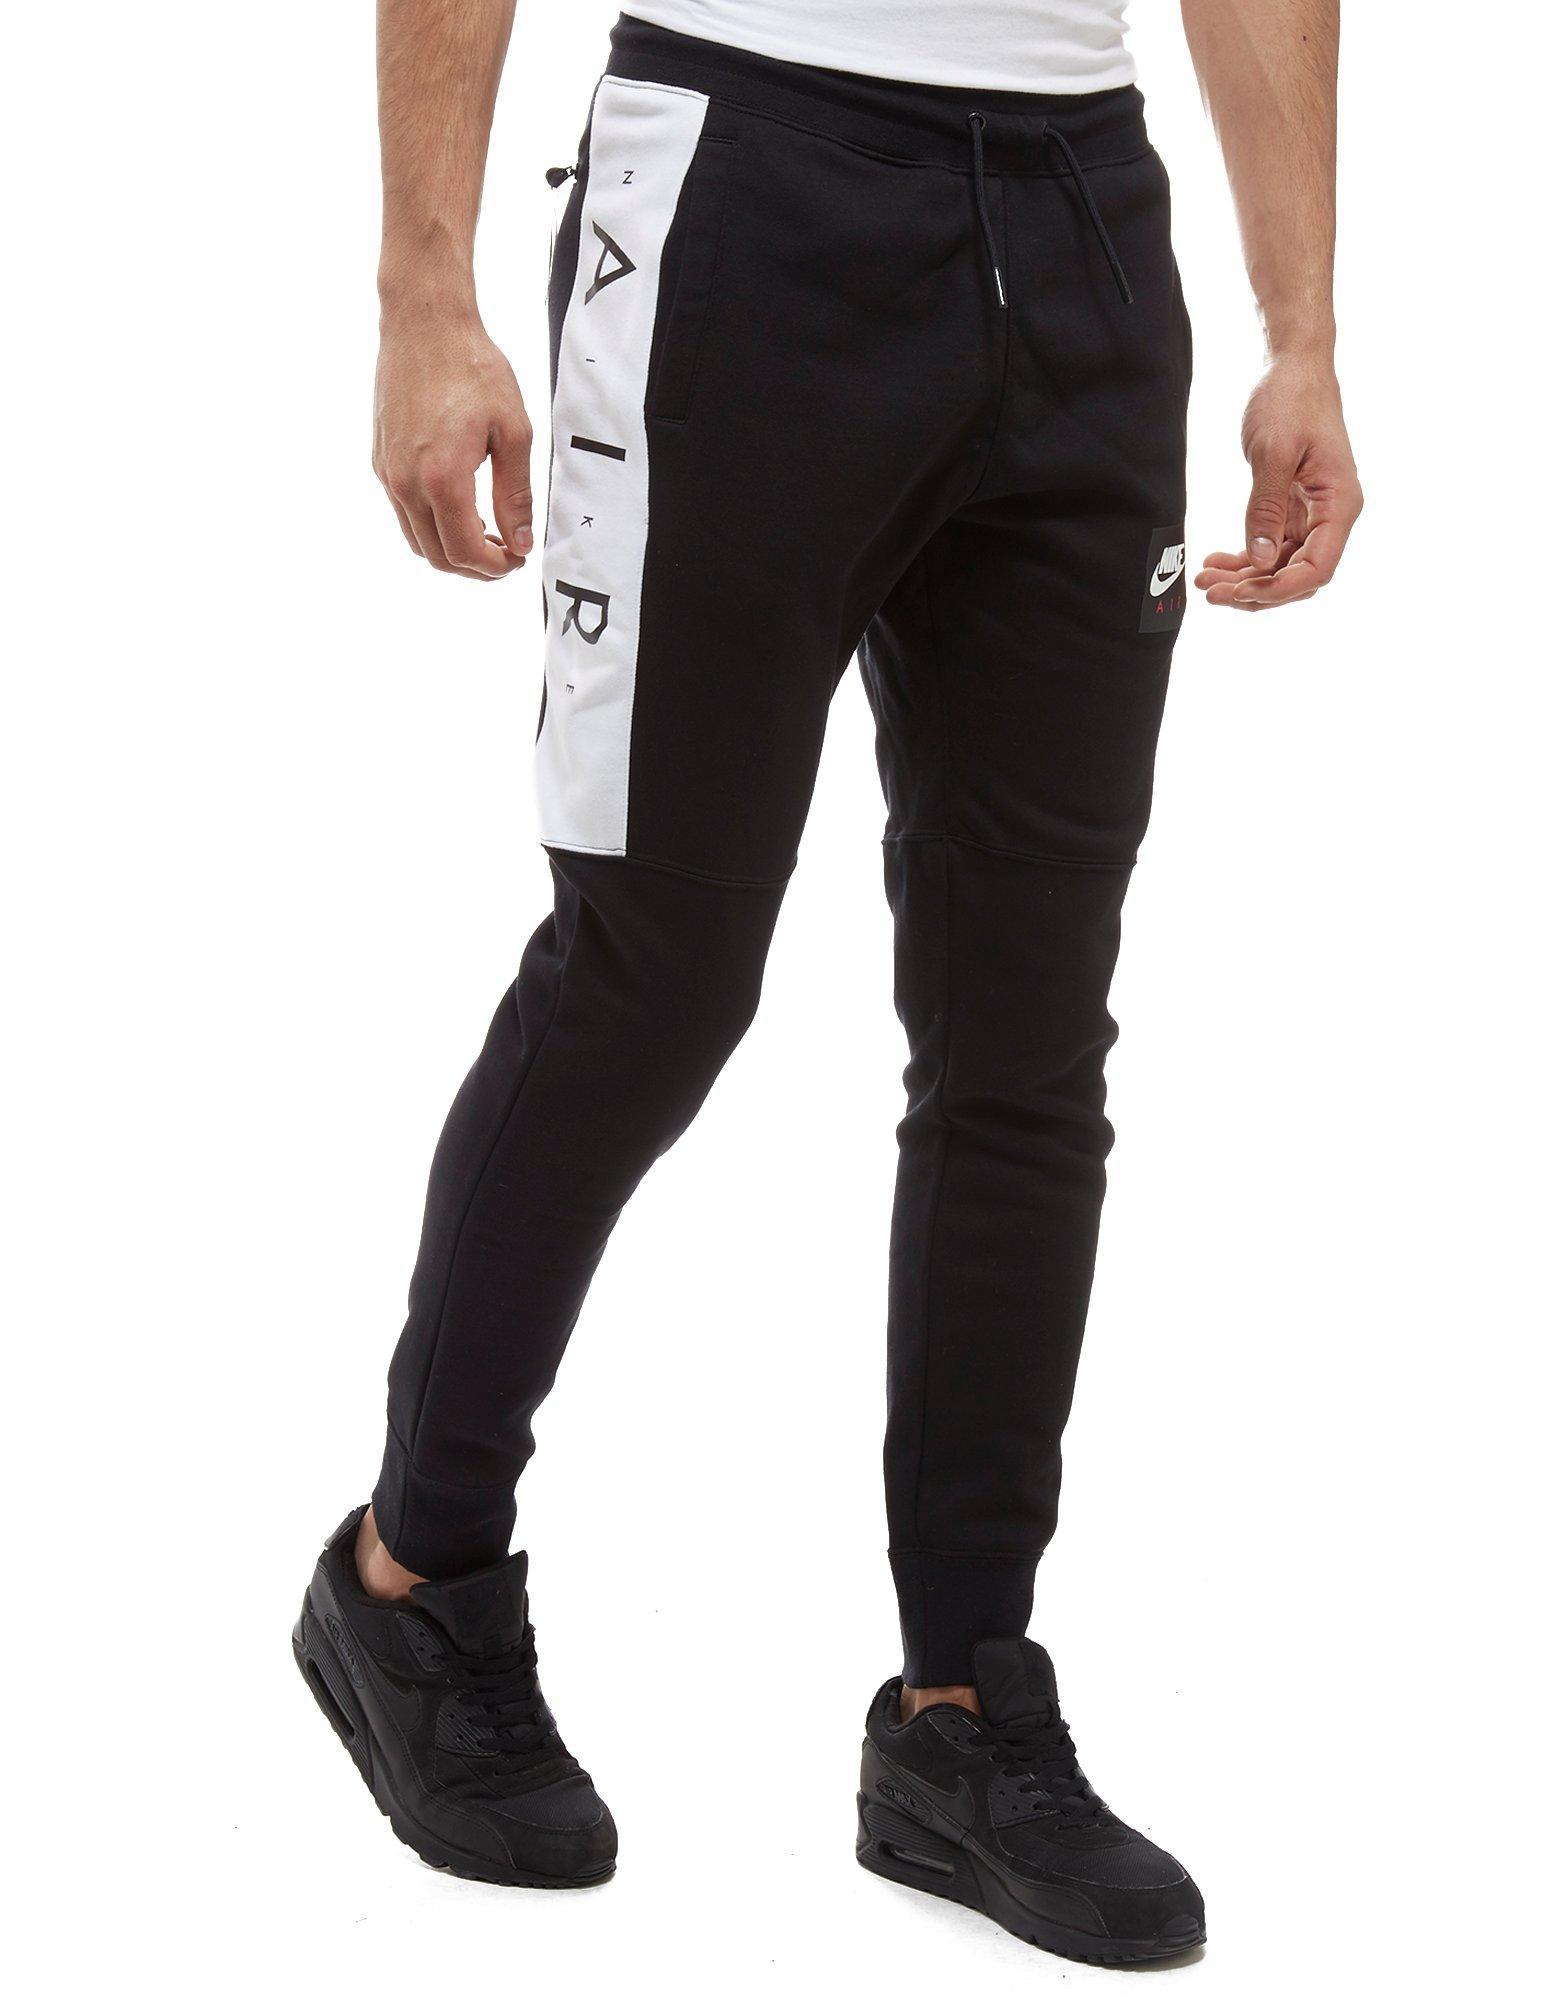 Nike Air Fleece Joggers in Black/White 